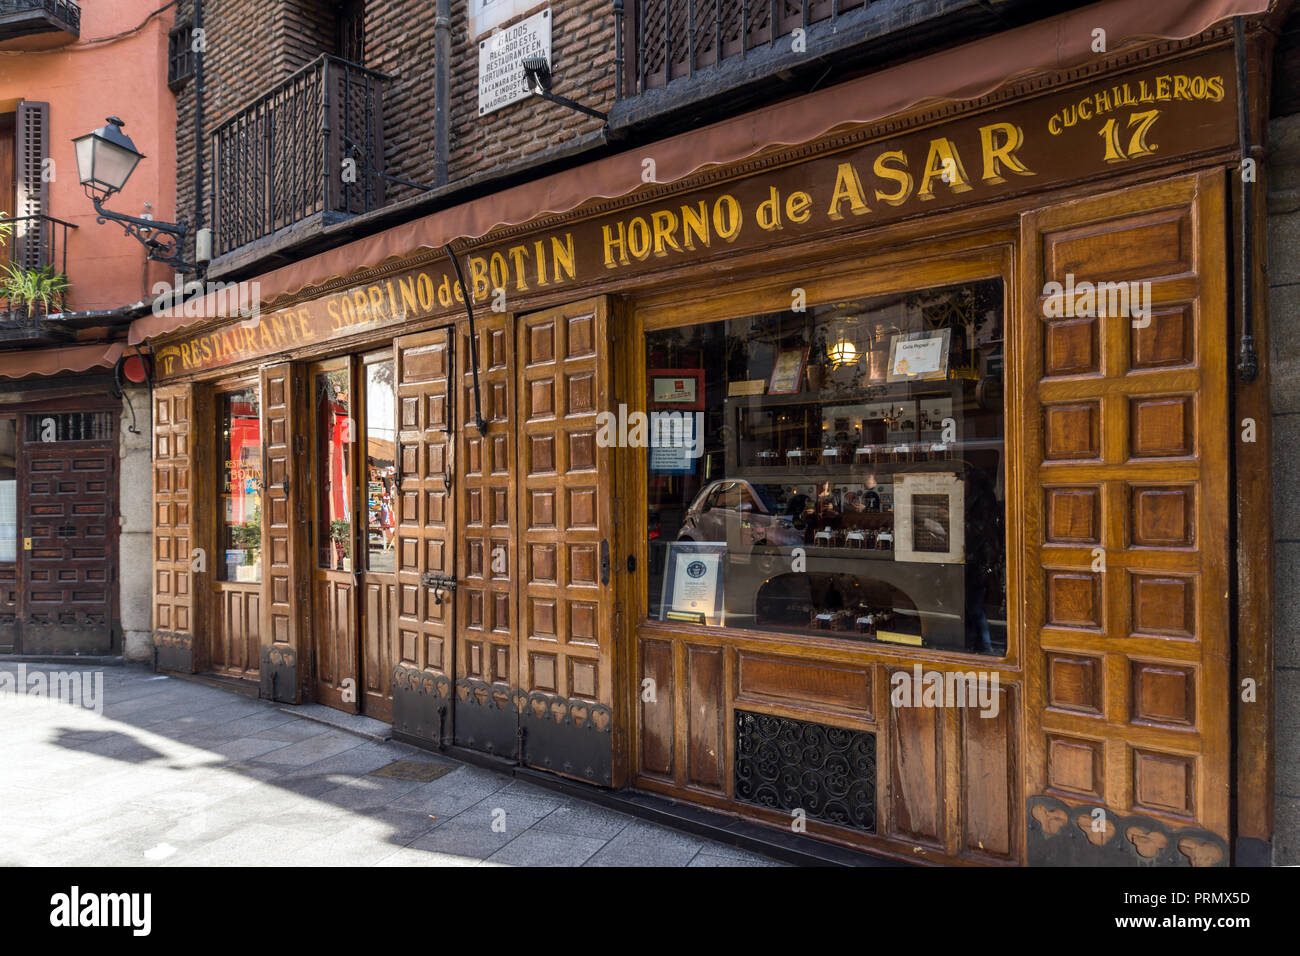 MADRID, SPAIN - JANUARY 23, 2018: Facade of Sobrino de Botin Restaurant in City of Madrid, Spain Stock Photo